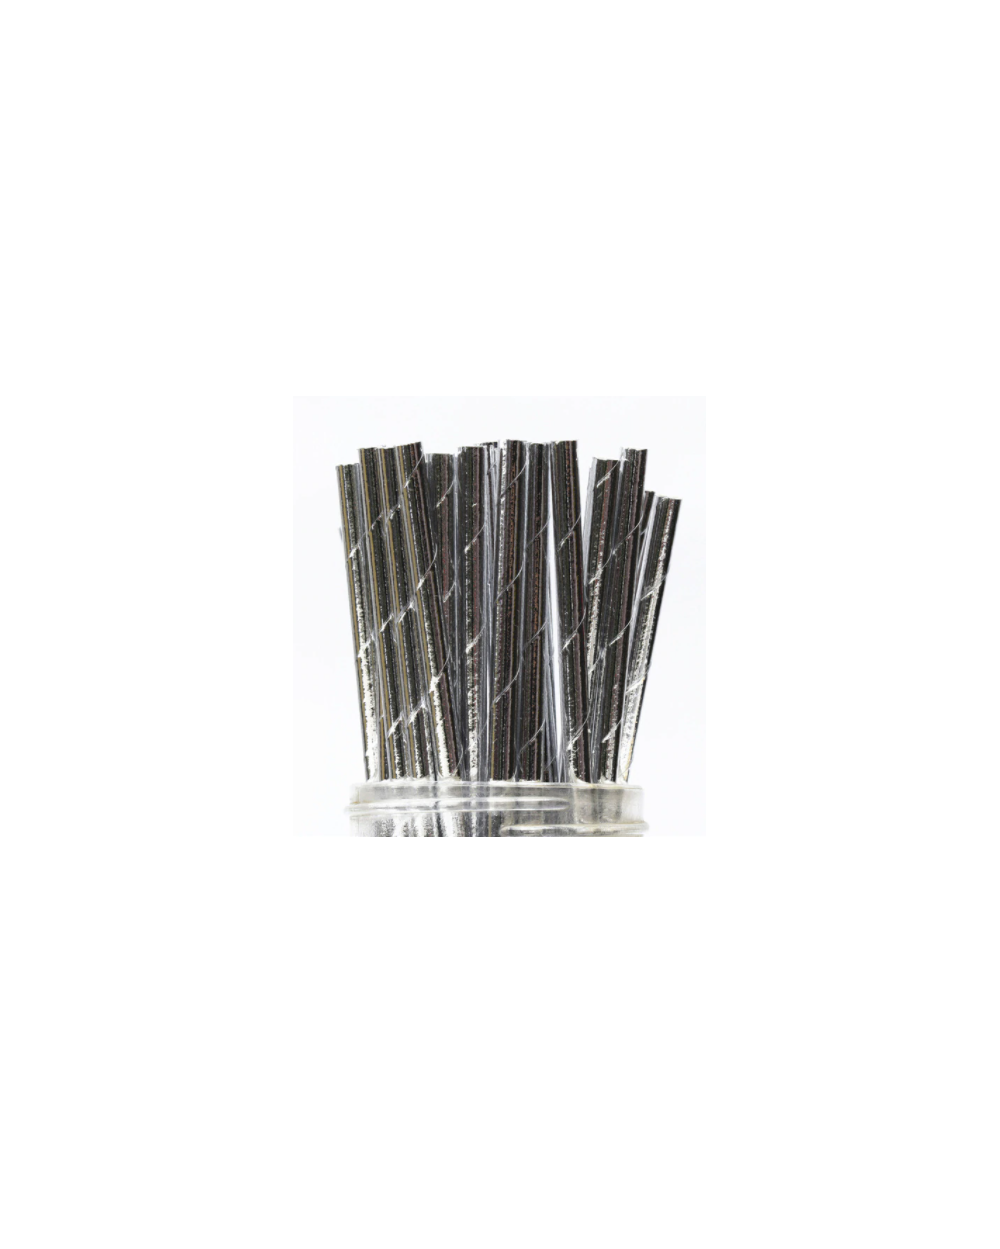 Set of 25 plain silver straws